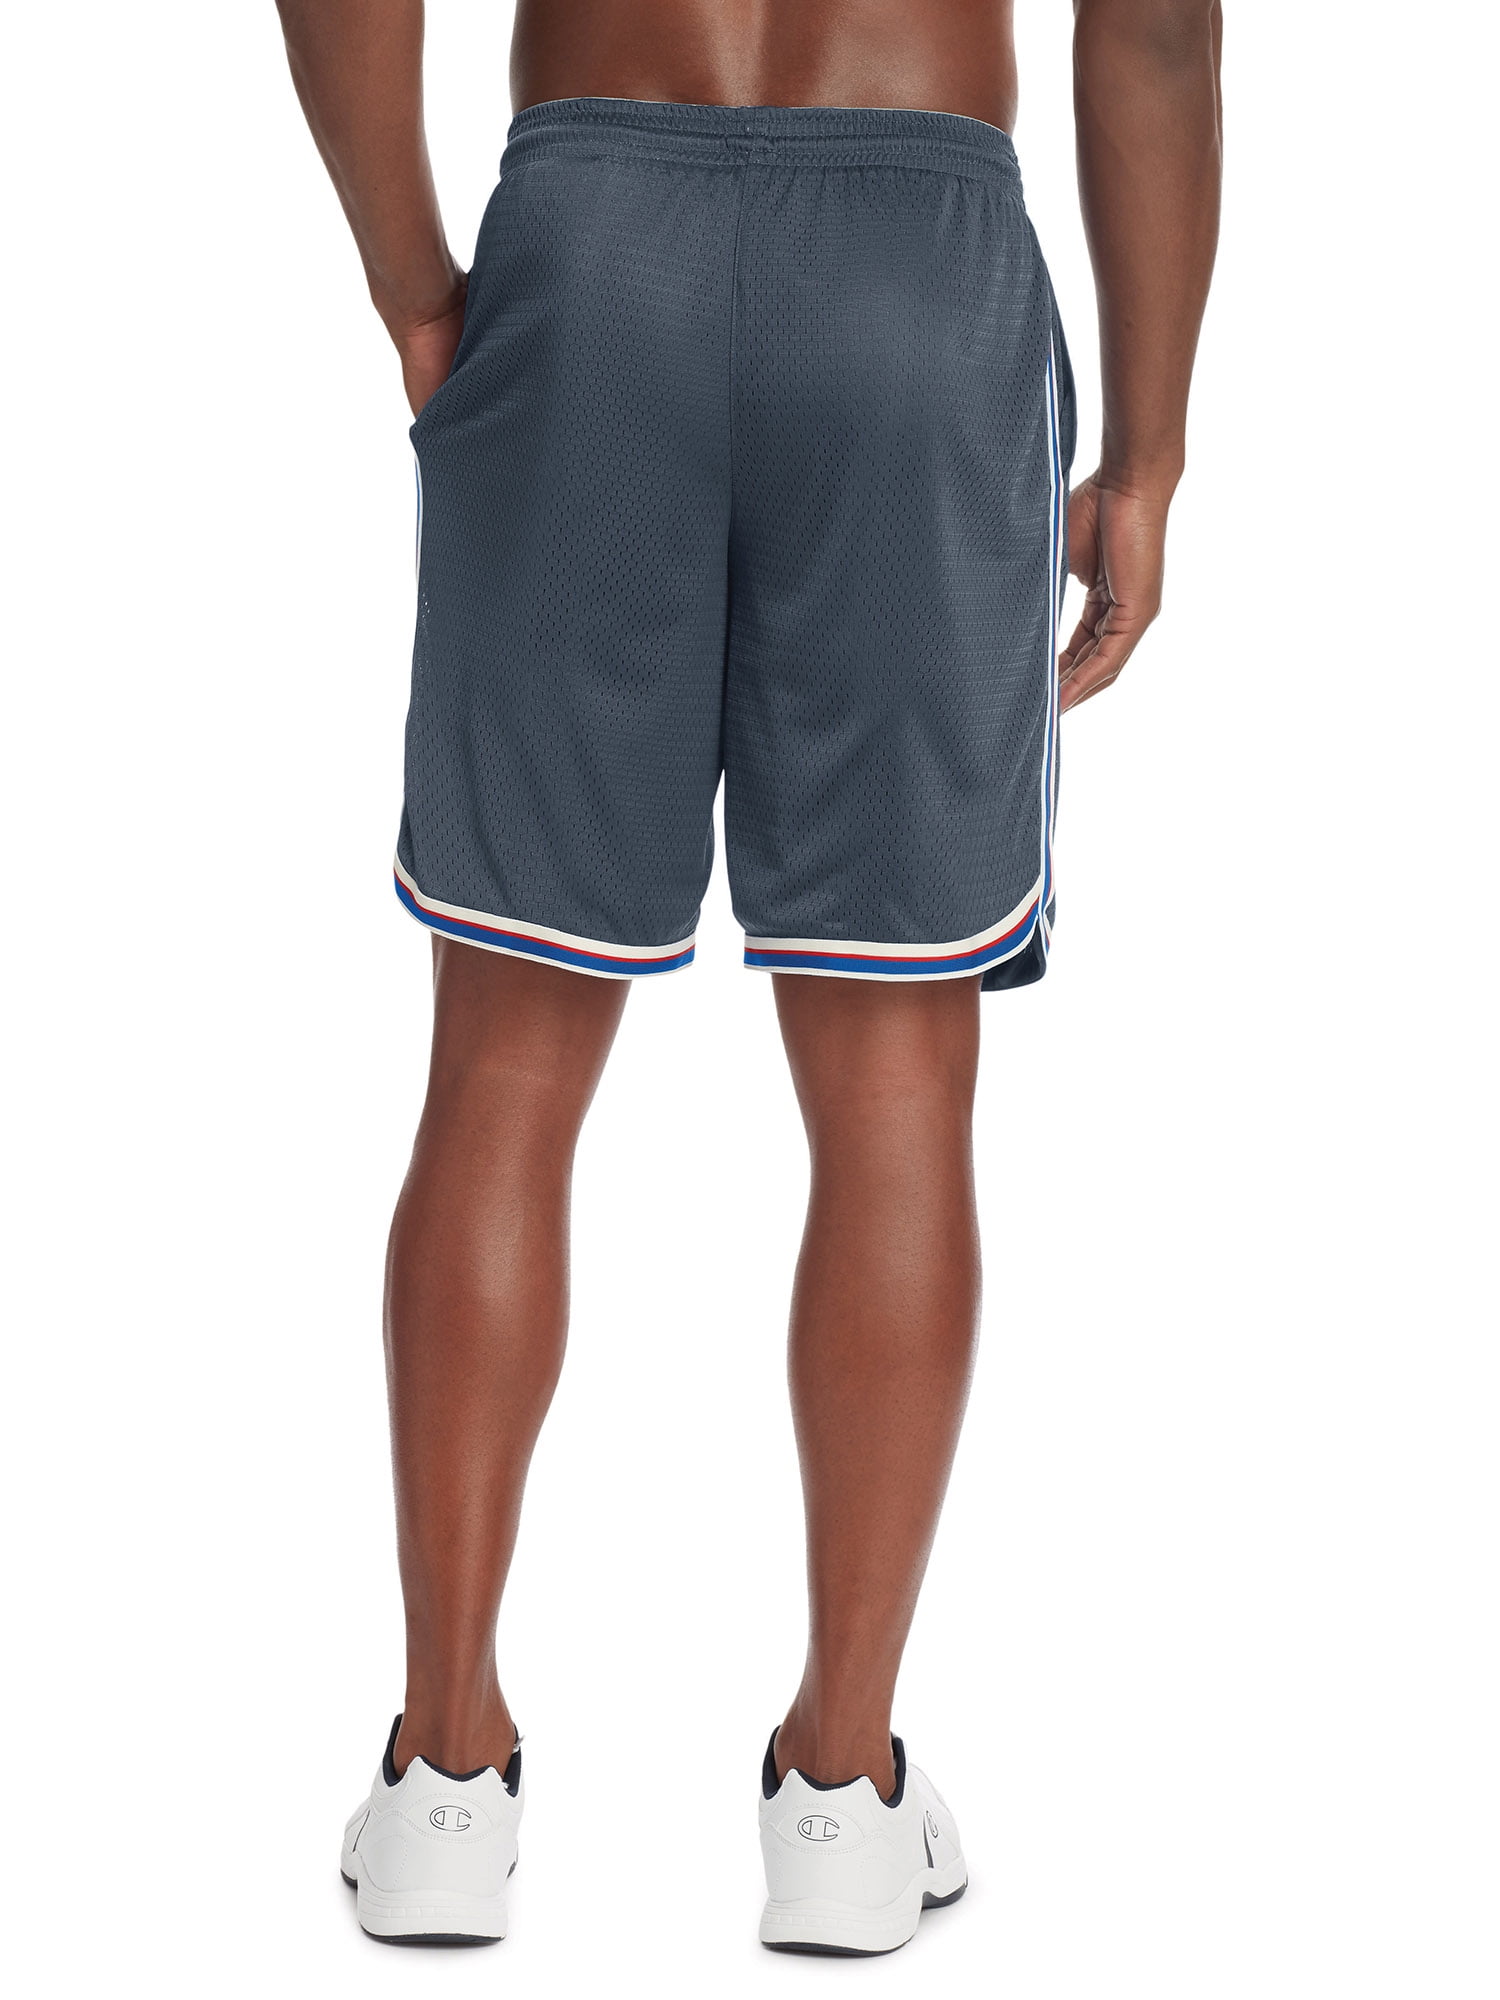 WT02 Men's Basketball Mesh Shorts 